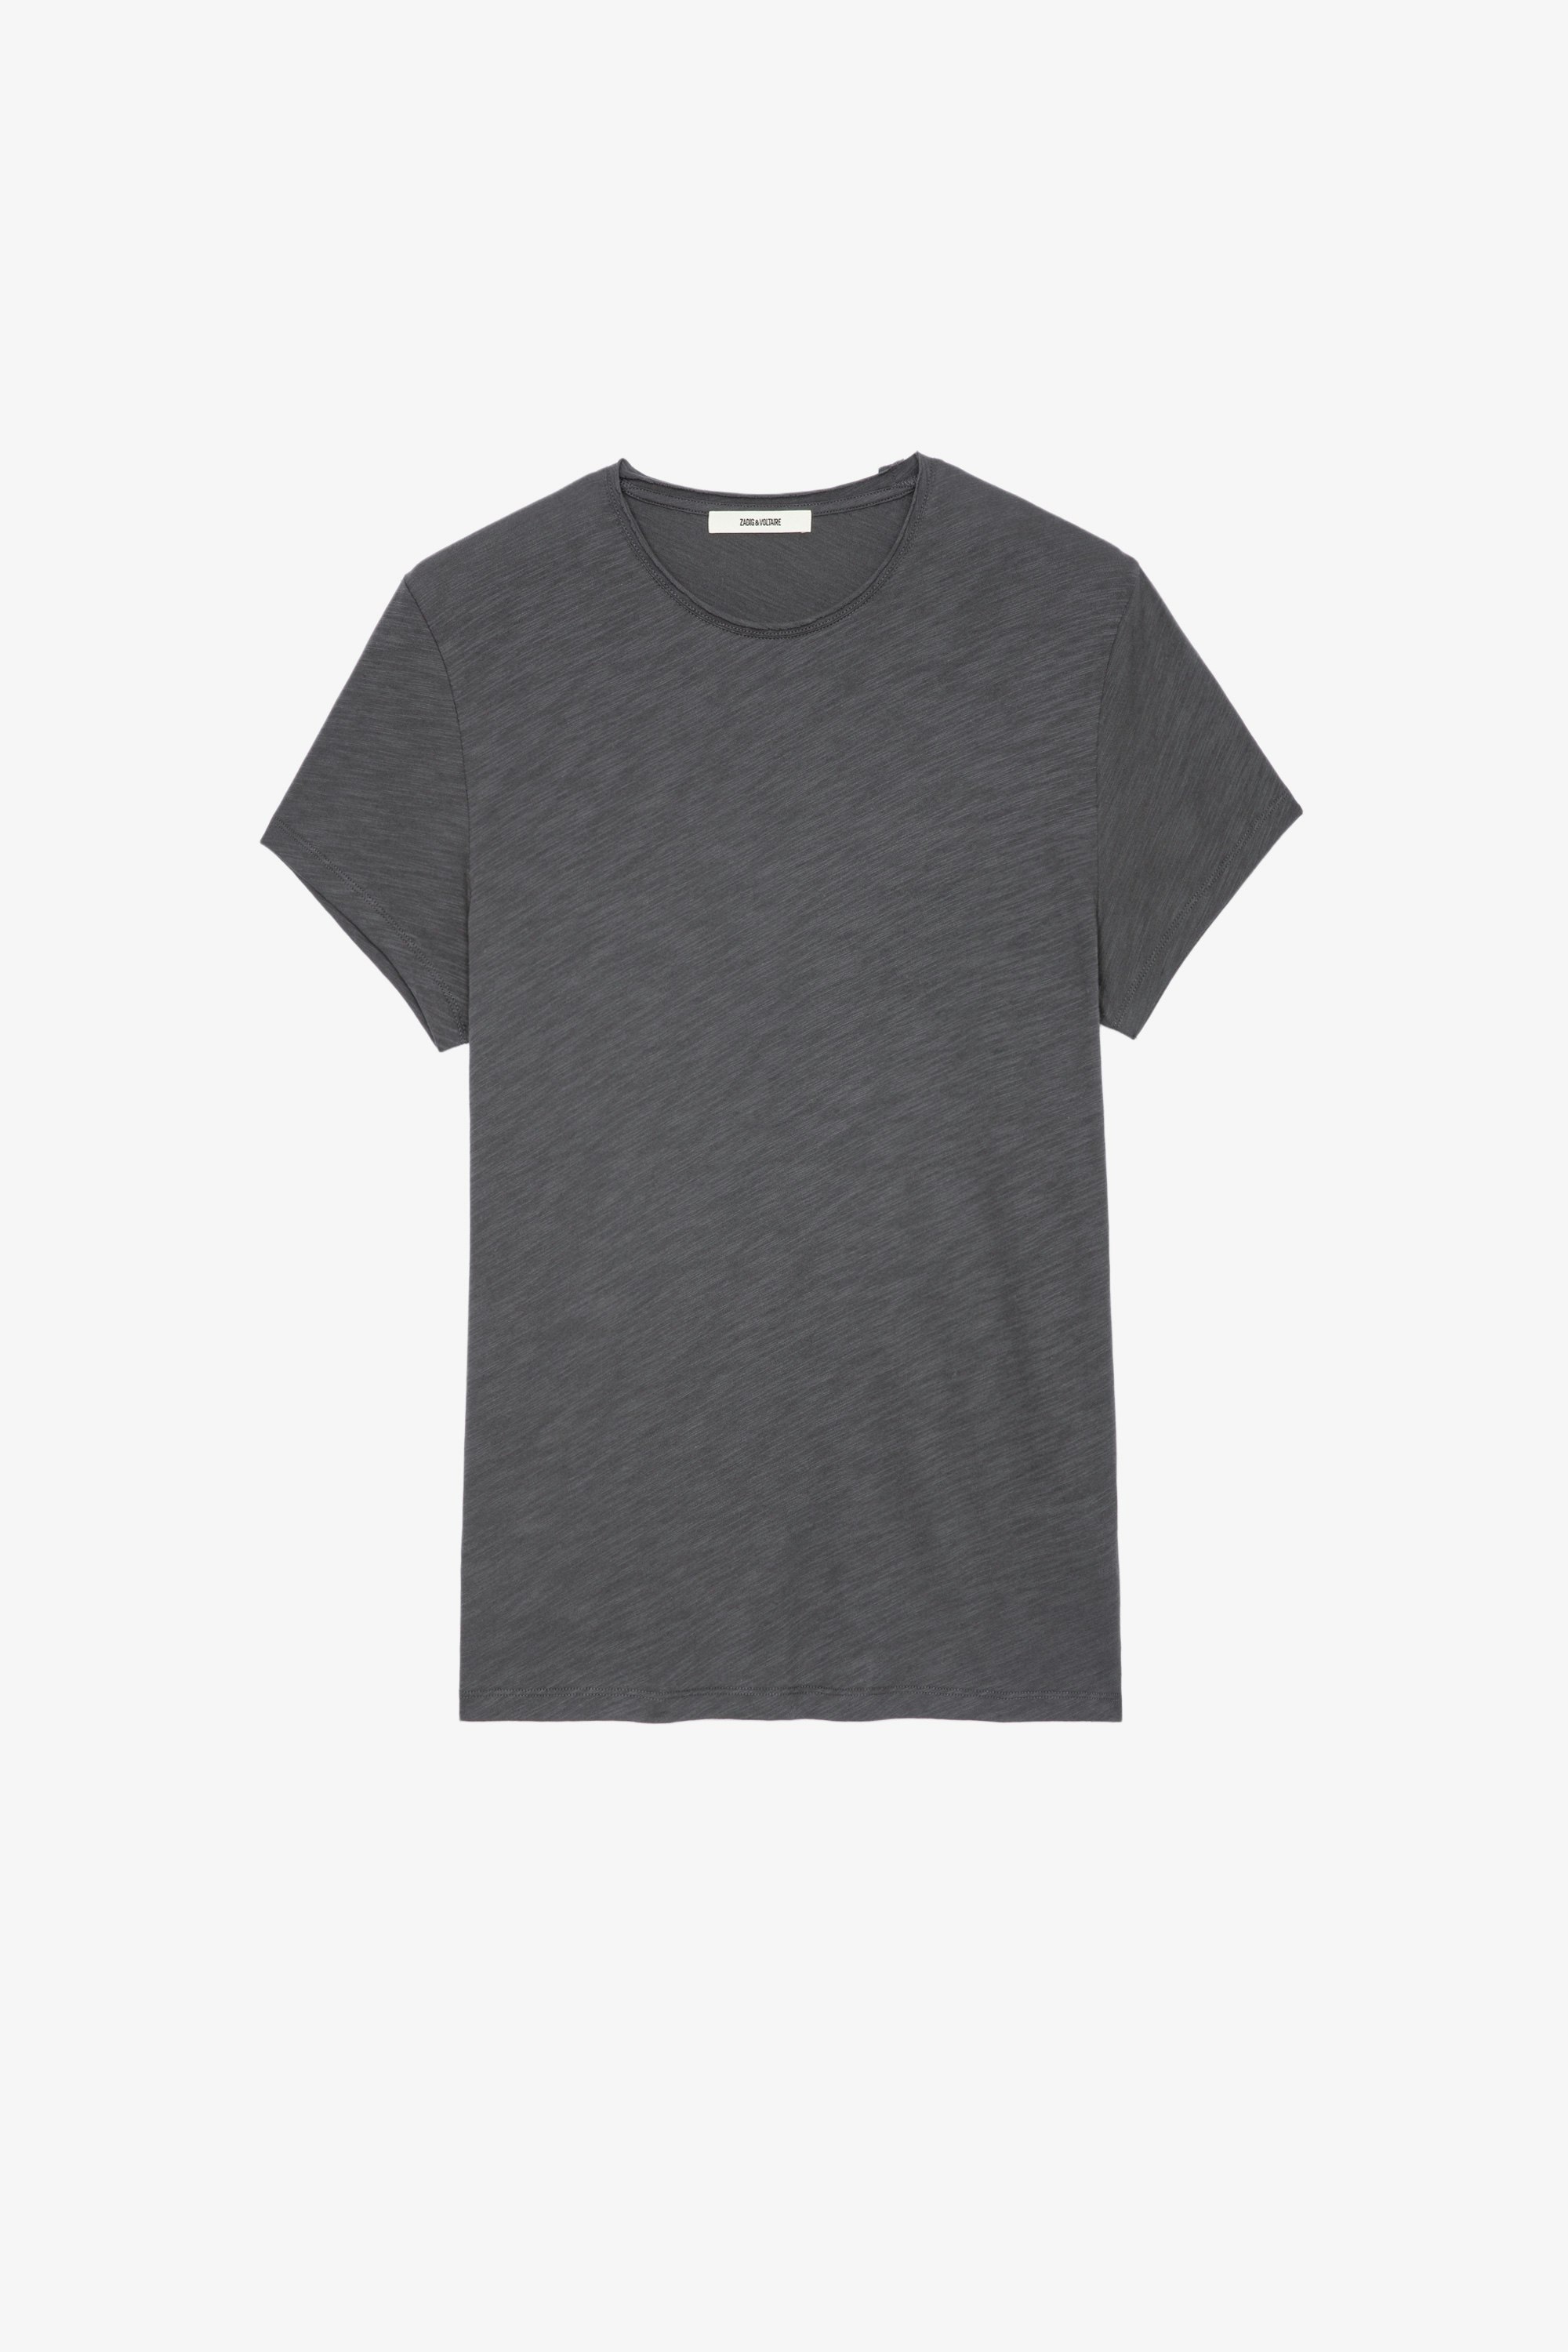 T-Shirt Toby Geflammt Graues Herren-T-Shirt aus geflammter Baumwolle